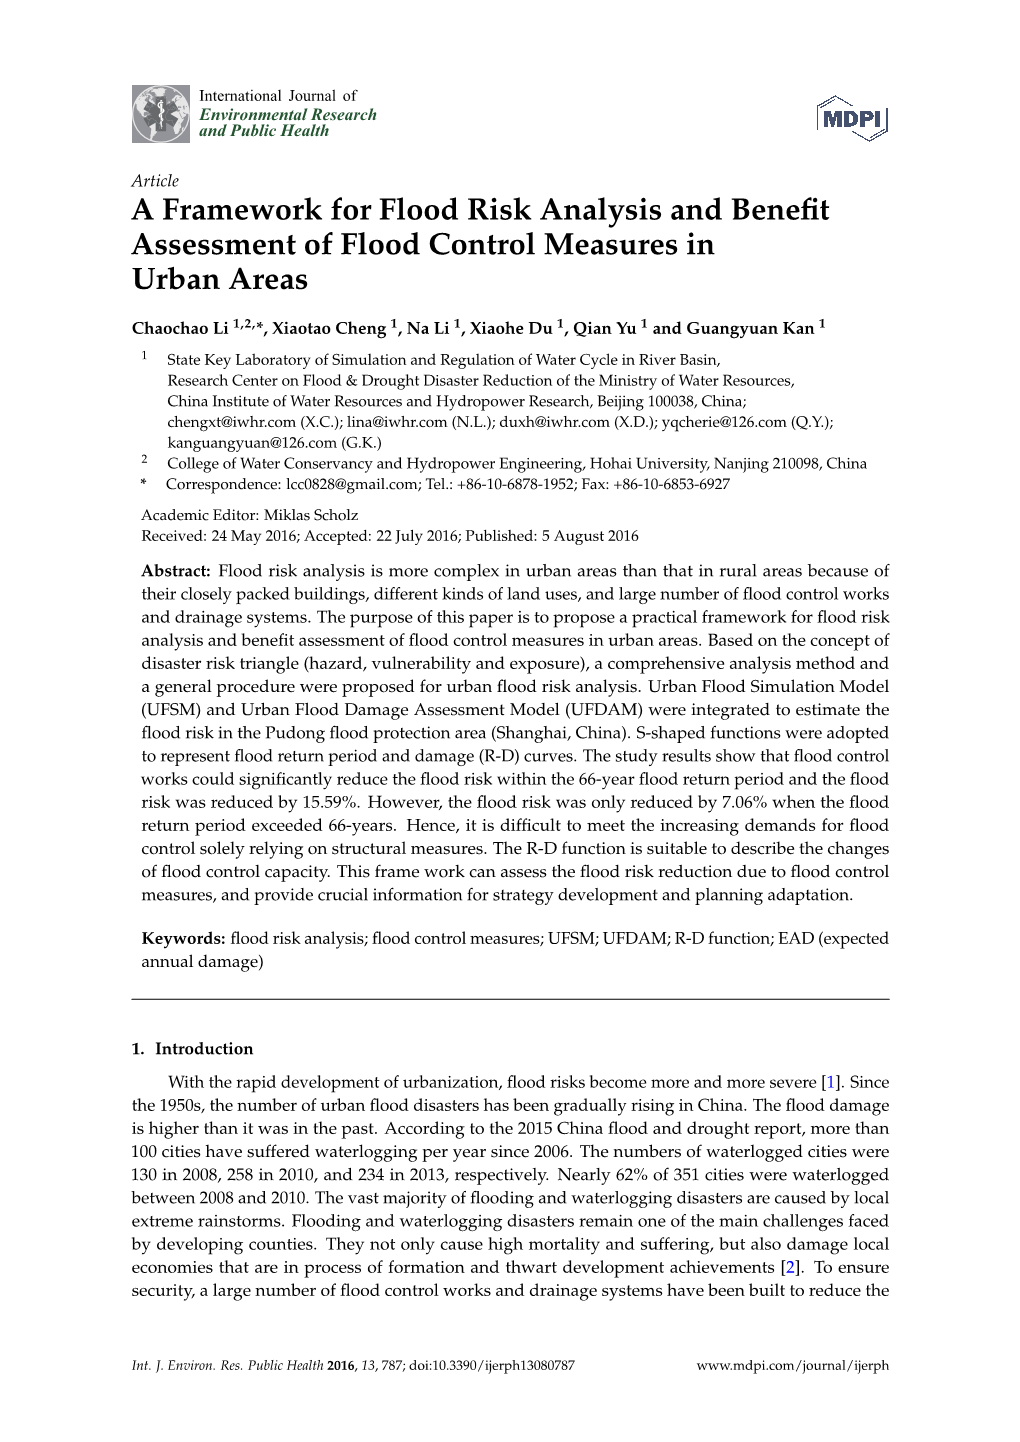 A Framework for Flood Risk Analysis and Benefit Assessment of Flood